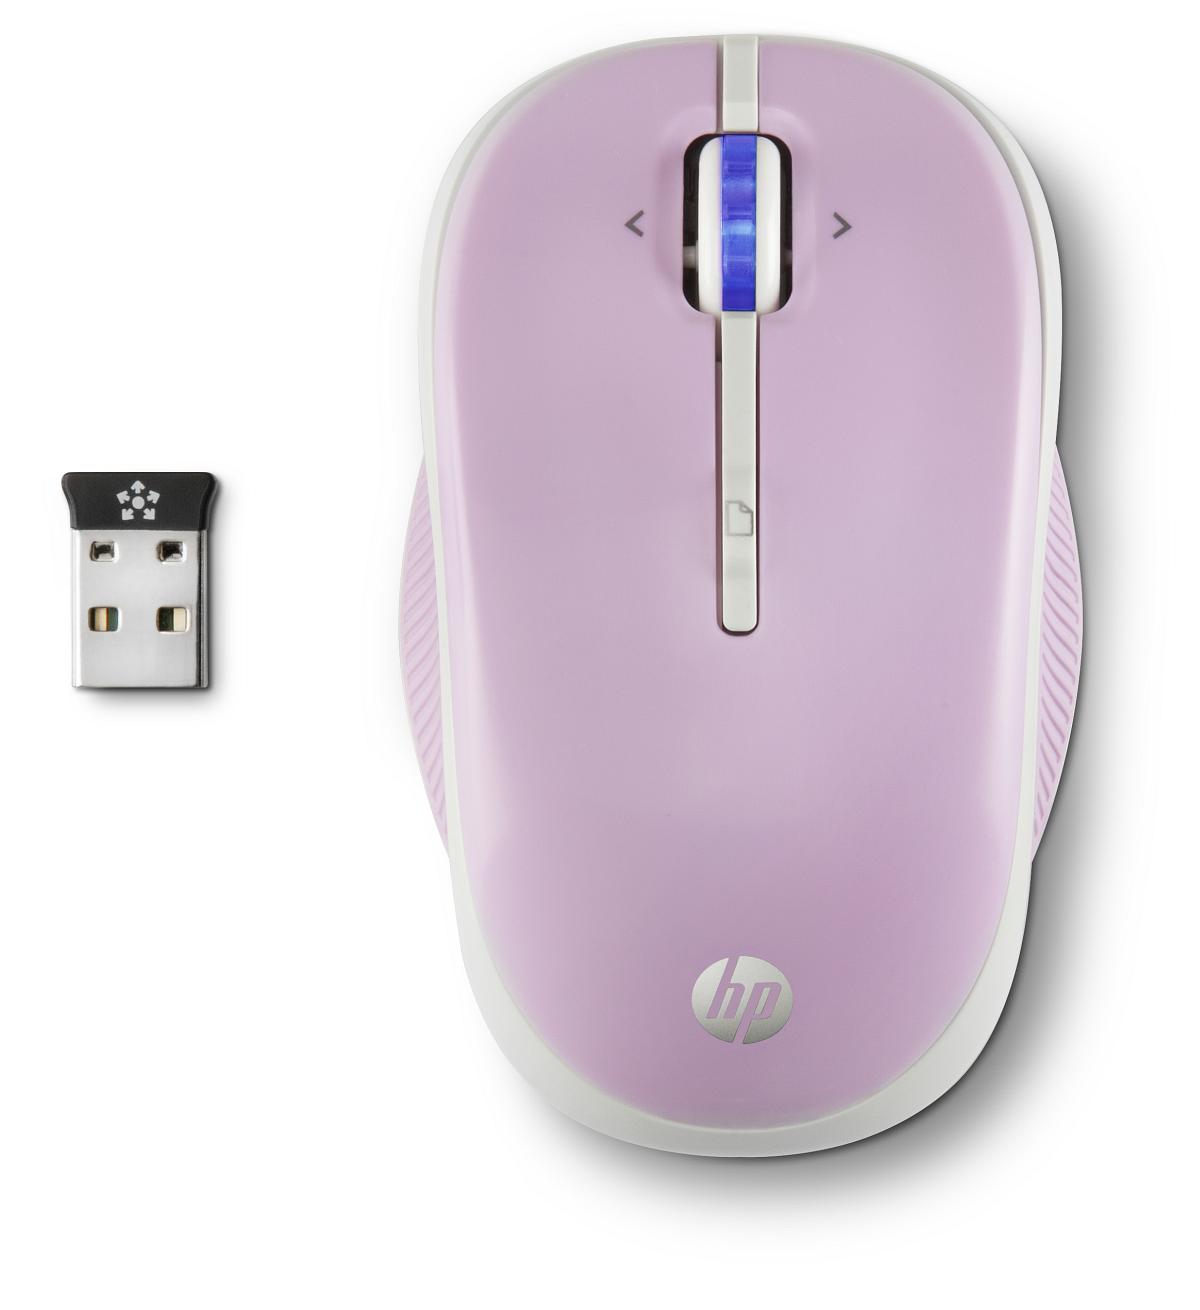 Bezdrôtová myš HP X3300 - ružová (H4N95AA)